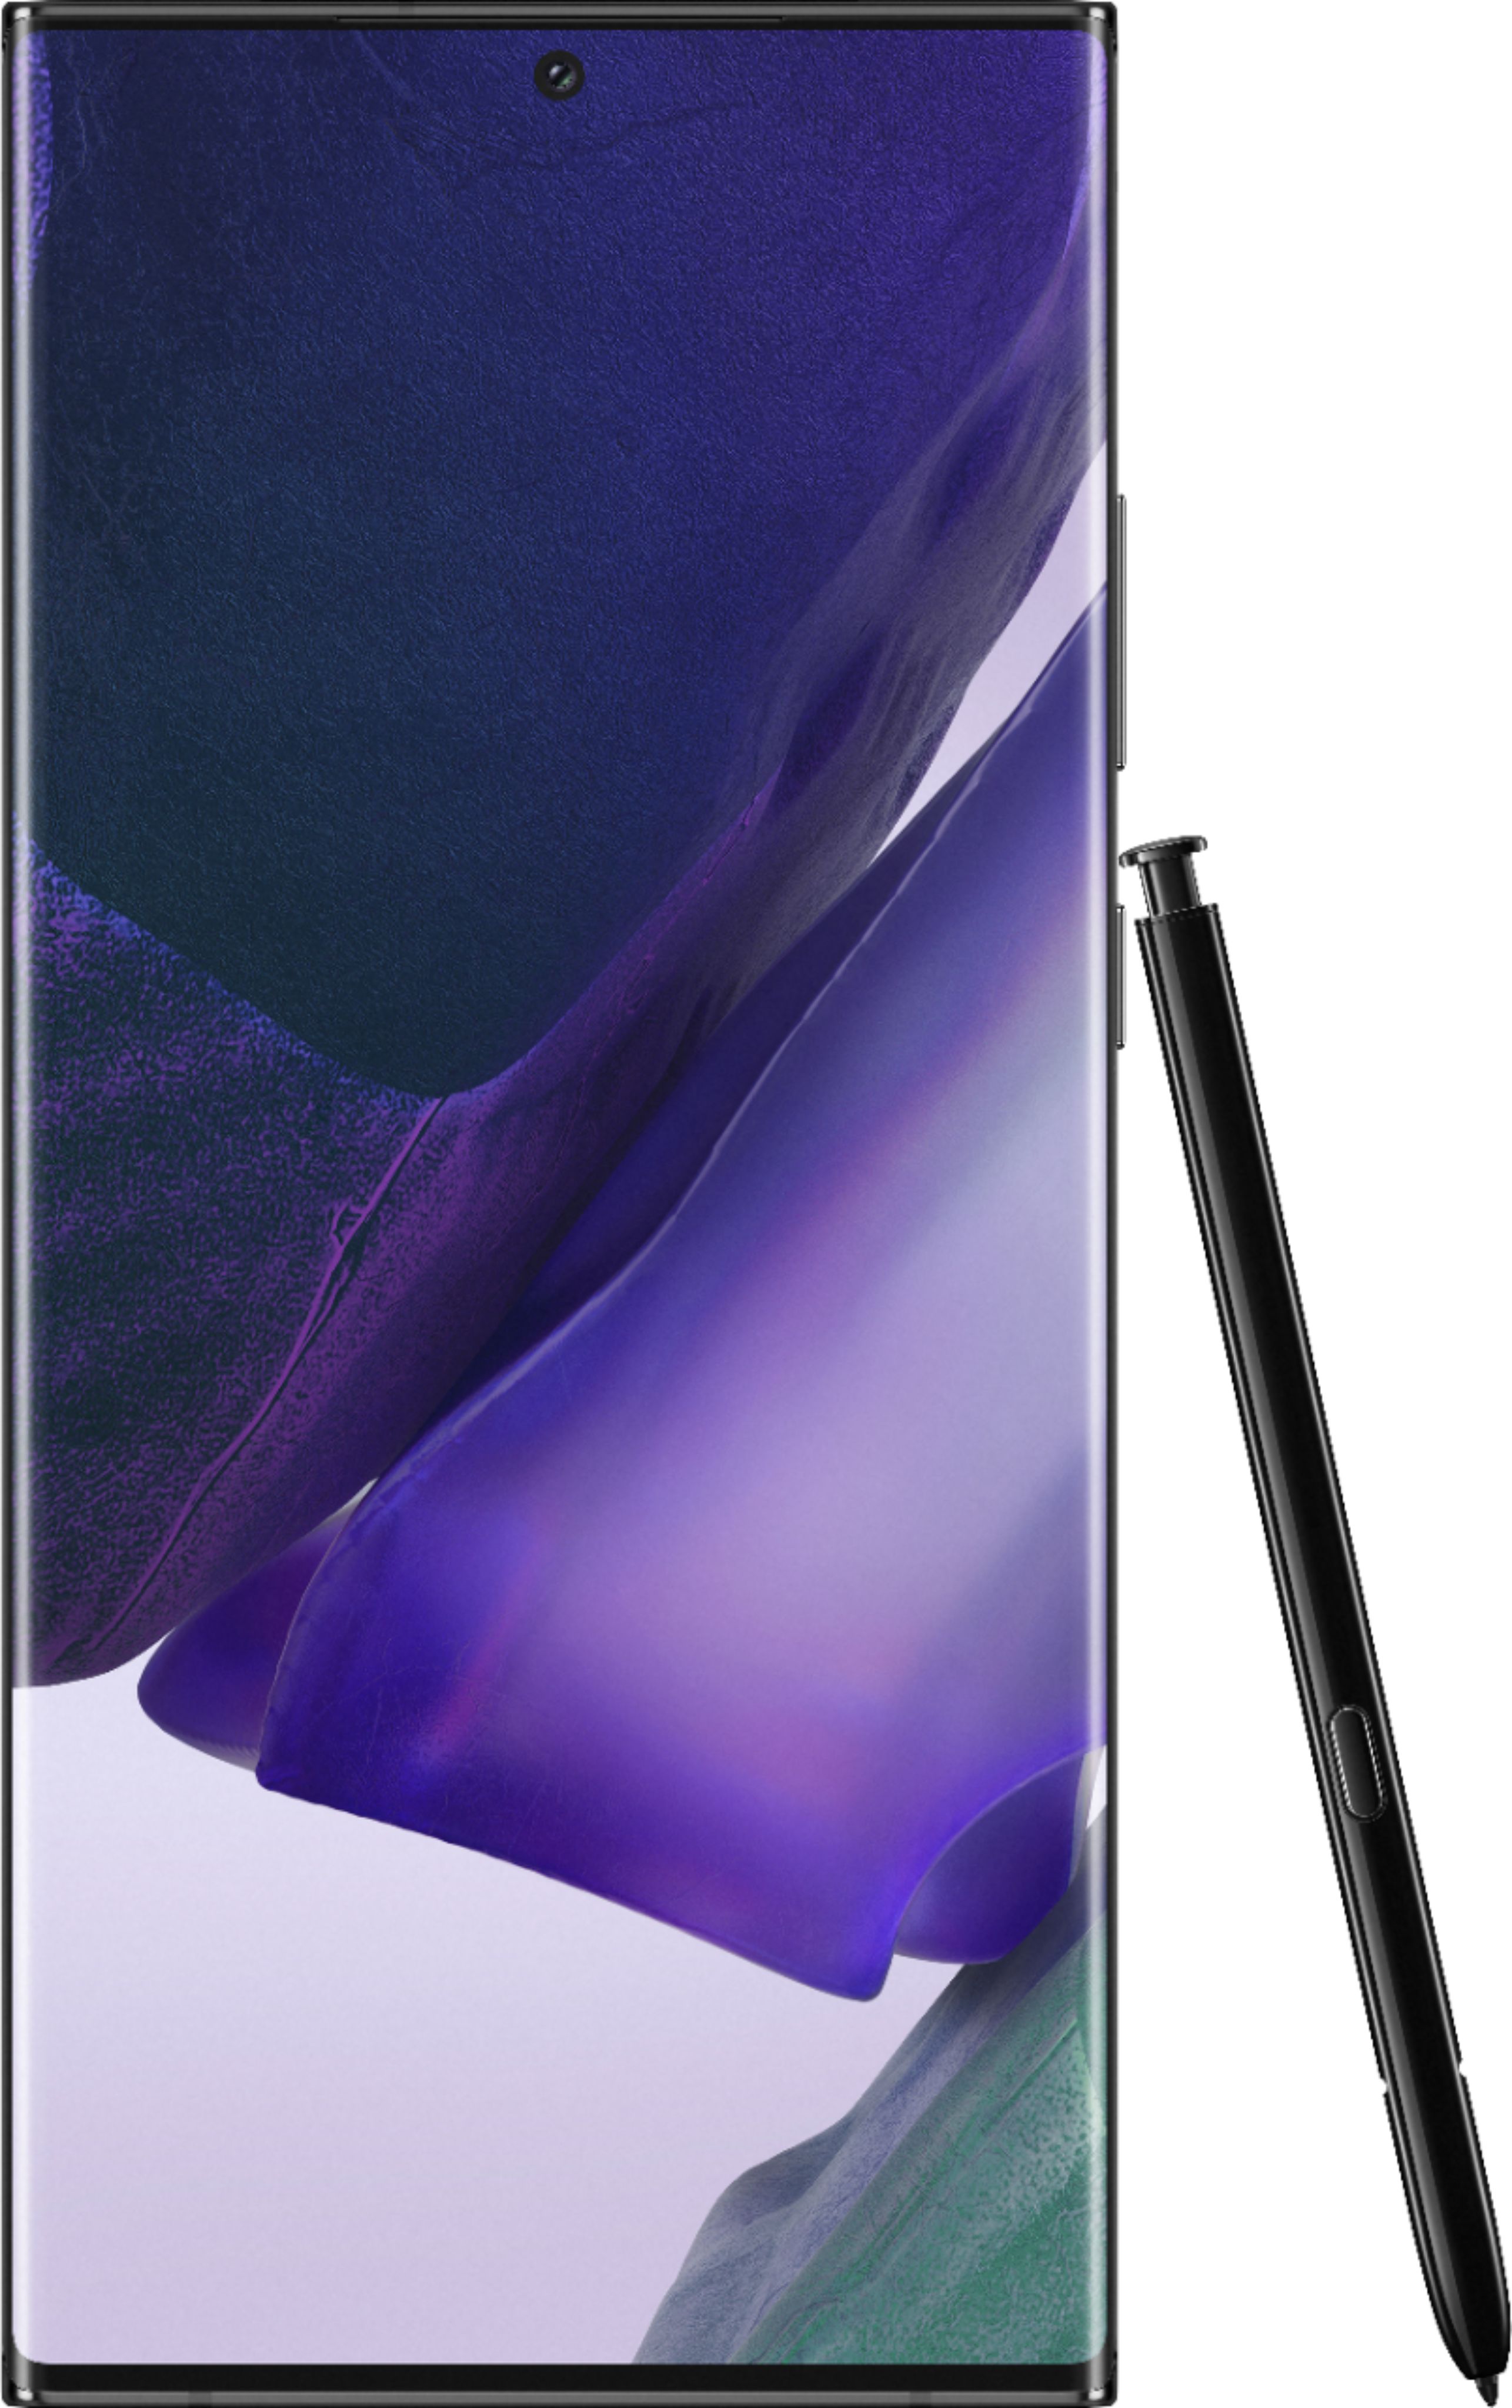 Samsung - Galaxy Note20 Ultra 5G 128GB - Mystic Black (Verizon)